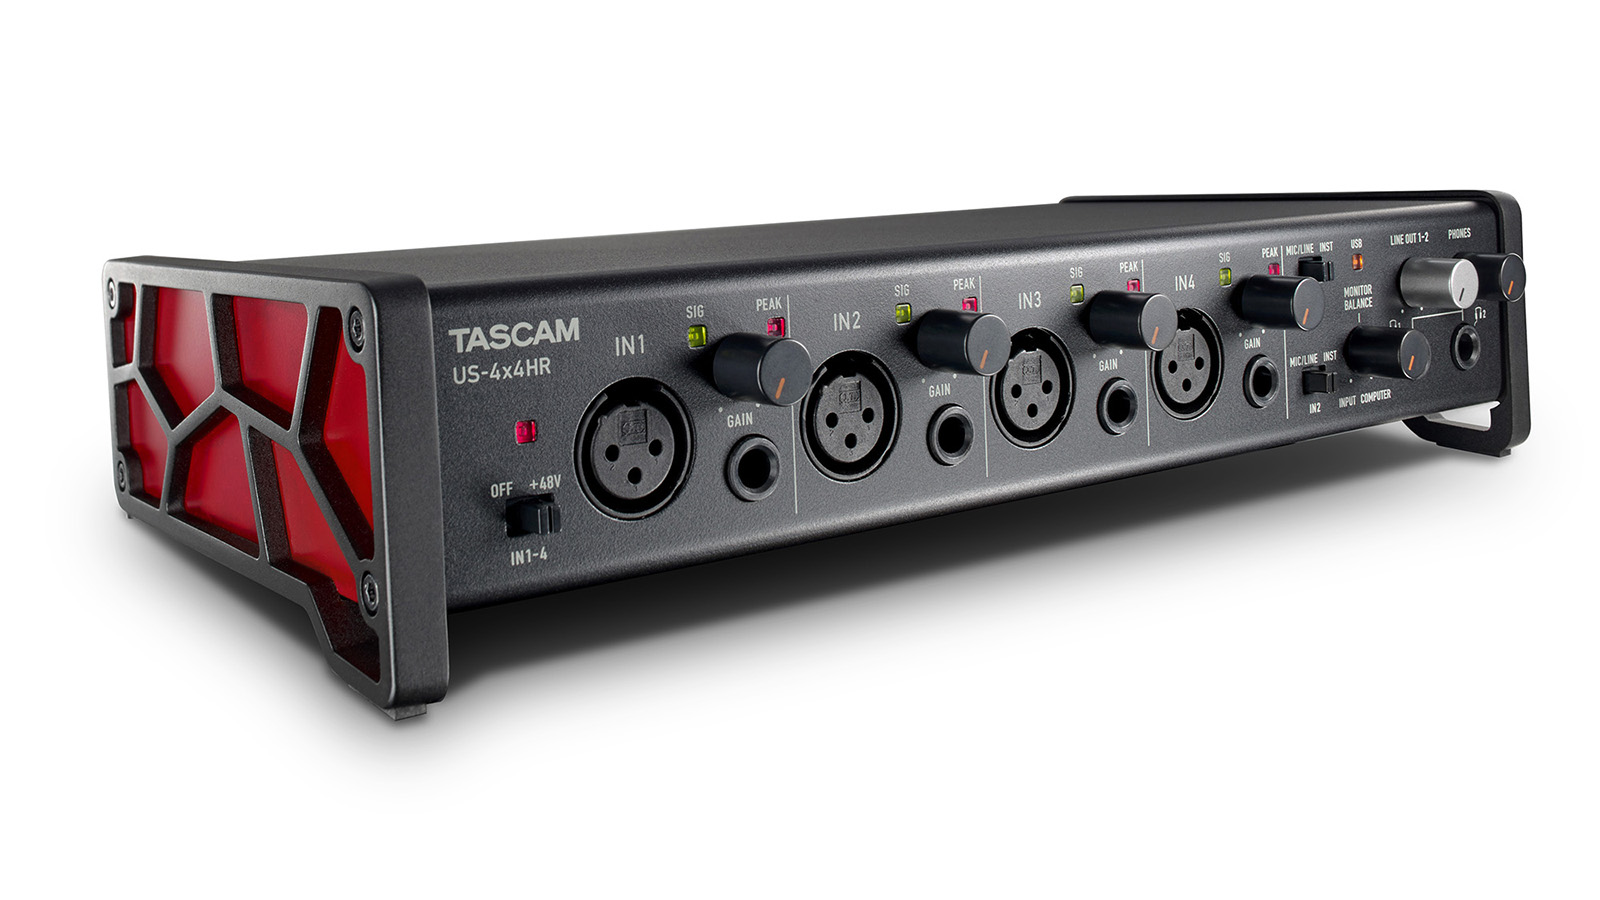 TASCAM TASCAM US-4x4HR AT2020 ボーカル録音にお勧めの周辺機器セット